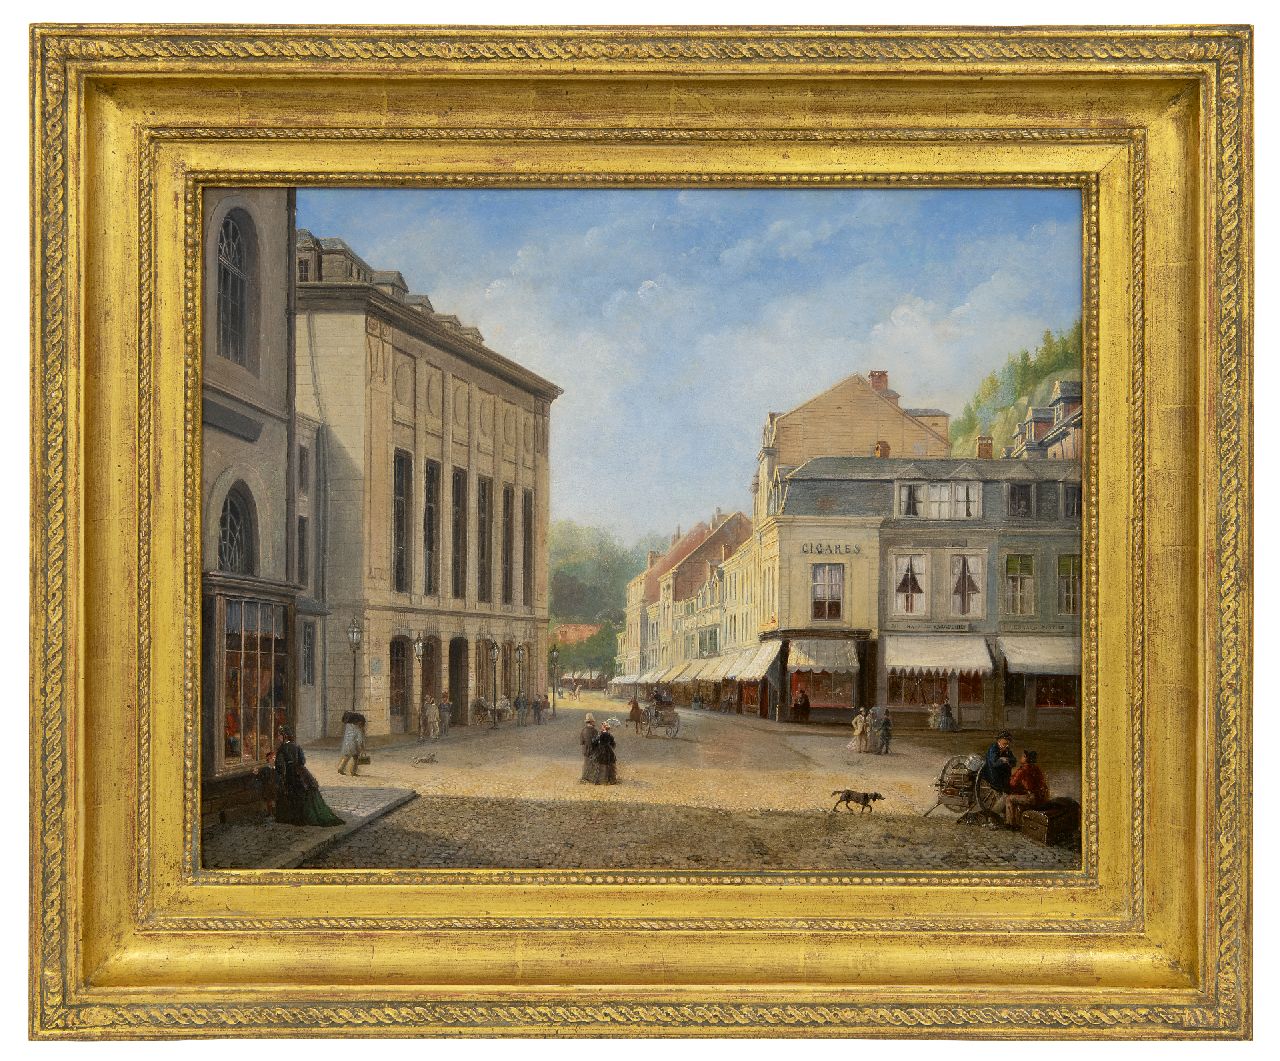 Tetar van Elven J.B.  | Jan 'Johannes' Baptist Tetar van Elven | Paintings offered for sale | Casino in spa, oil on panel 36.9 x 47.0 cm, signed l.l. with initials